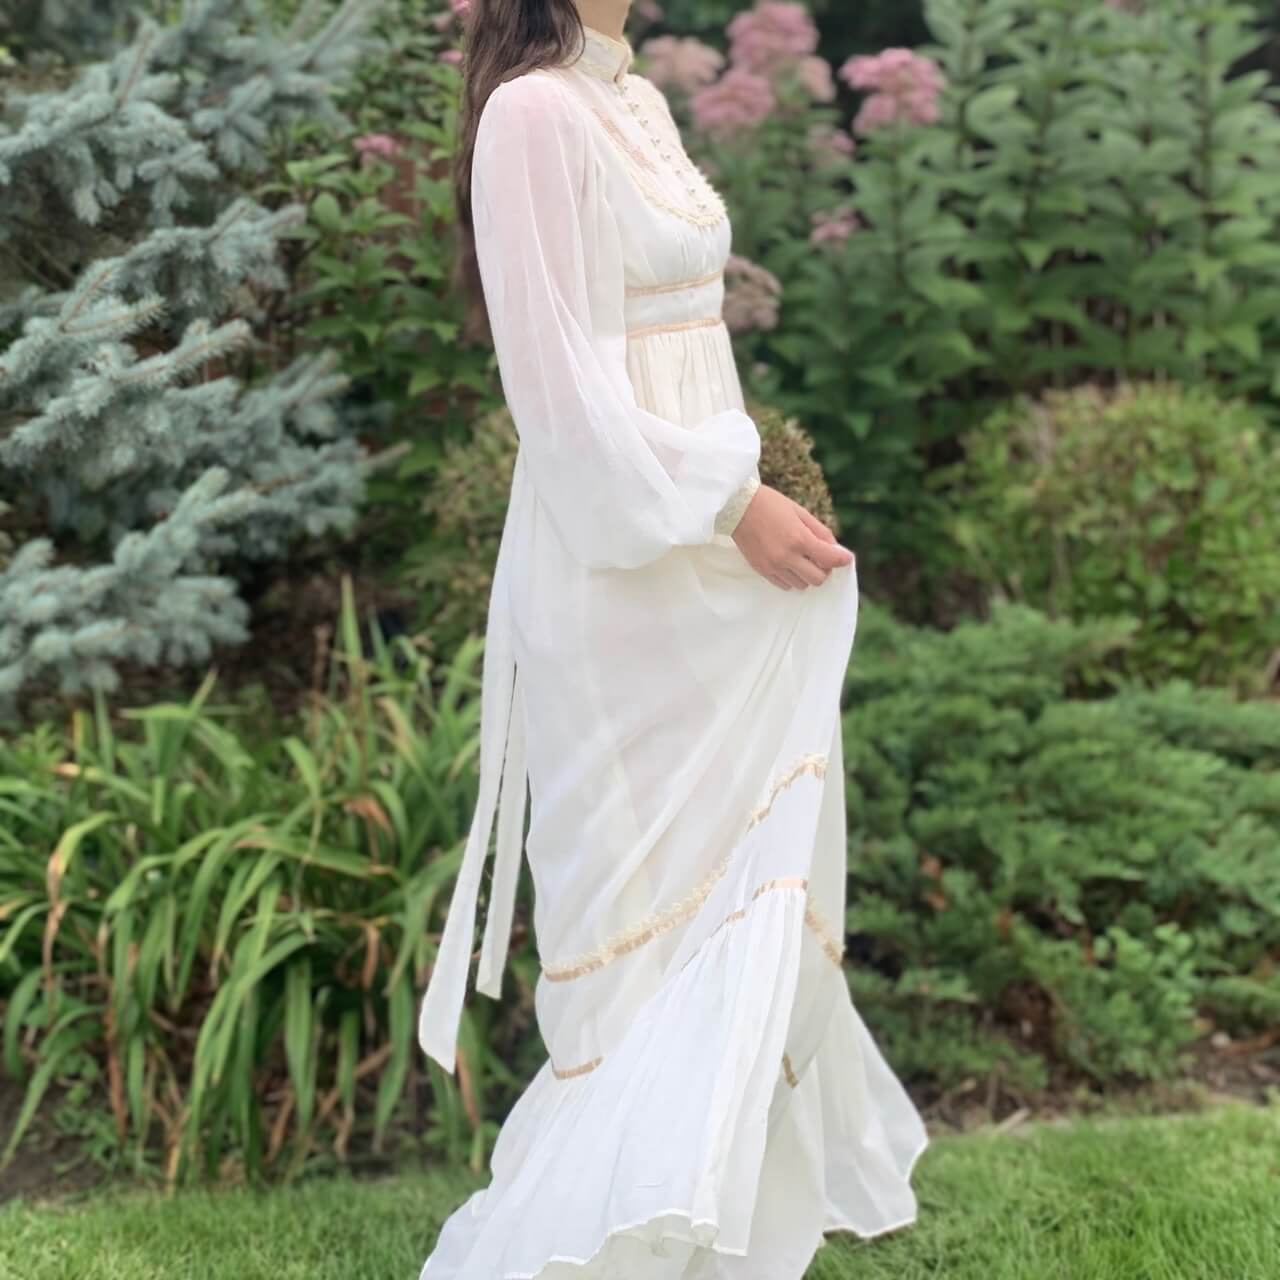 model wearing a white maxi dress outside